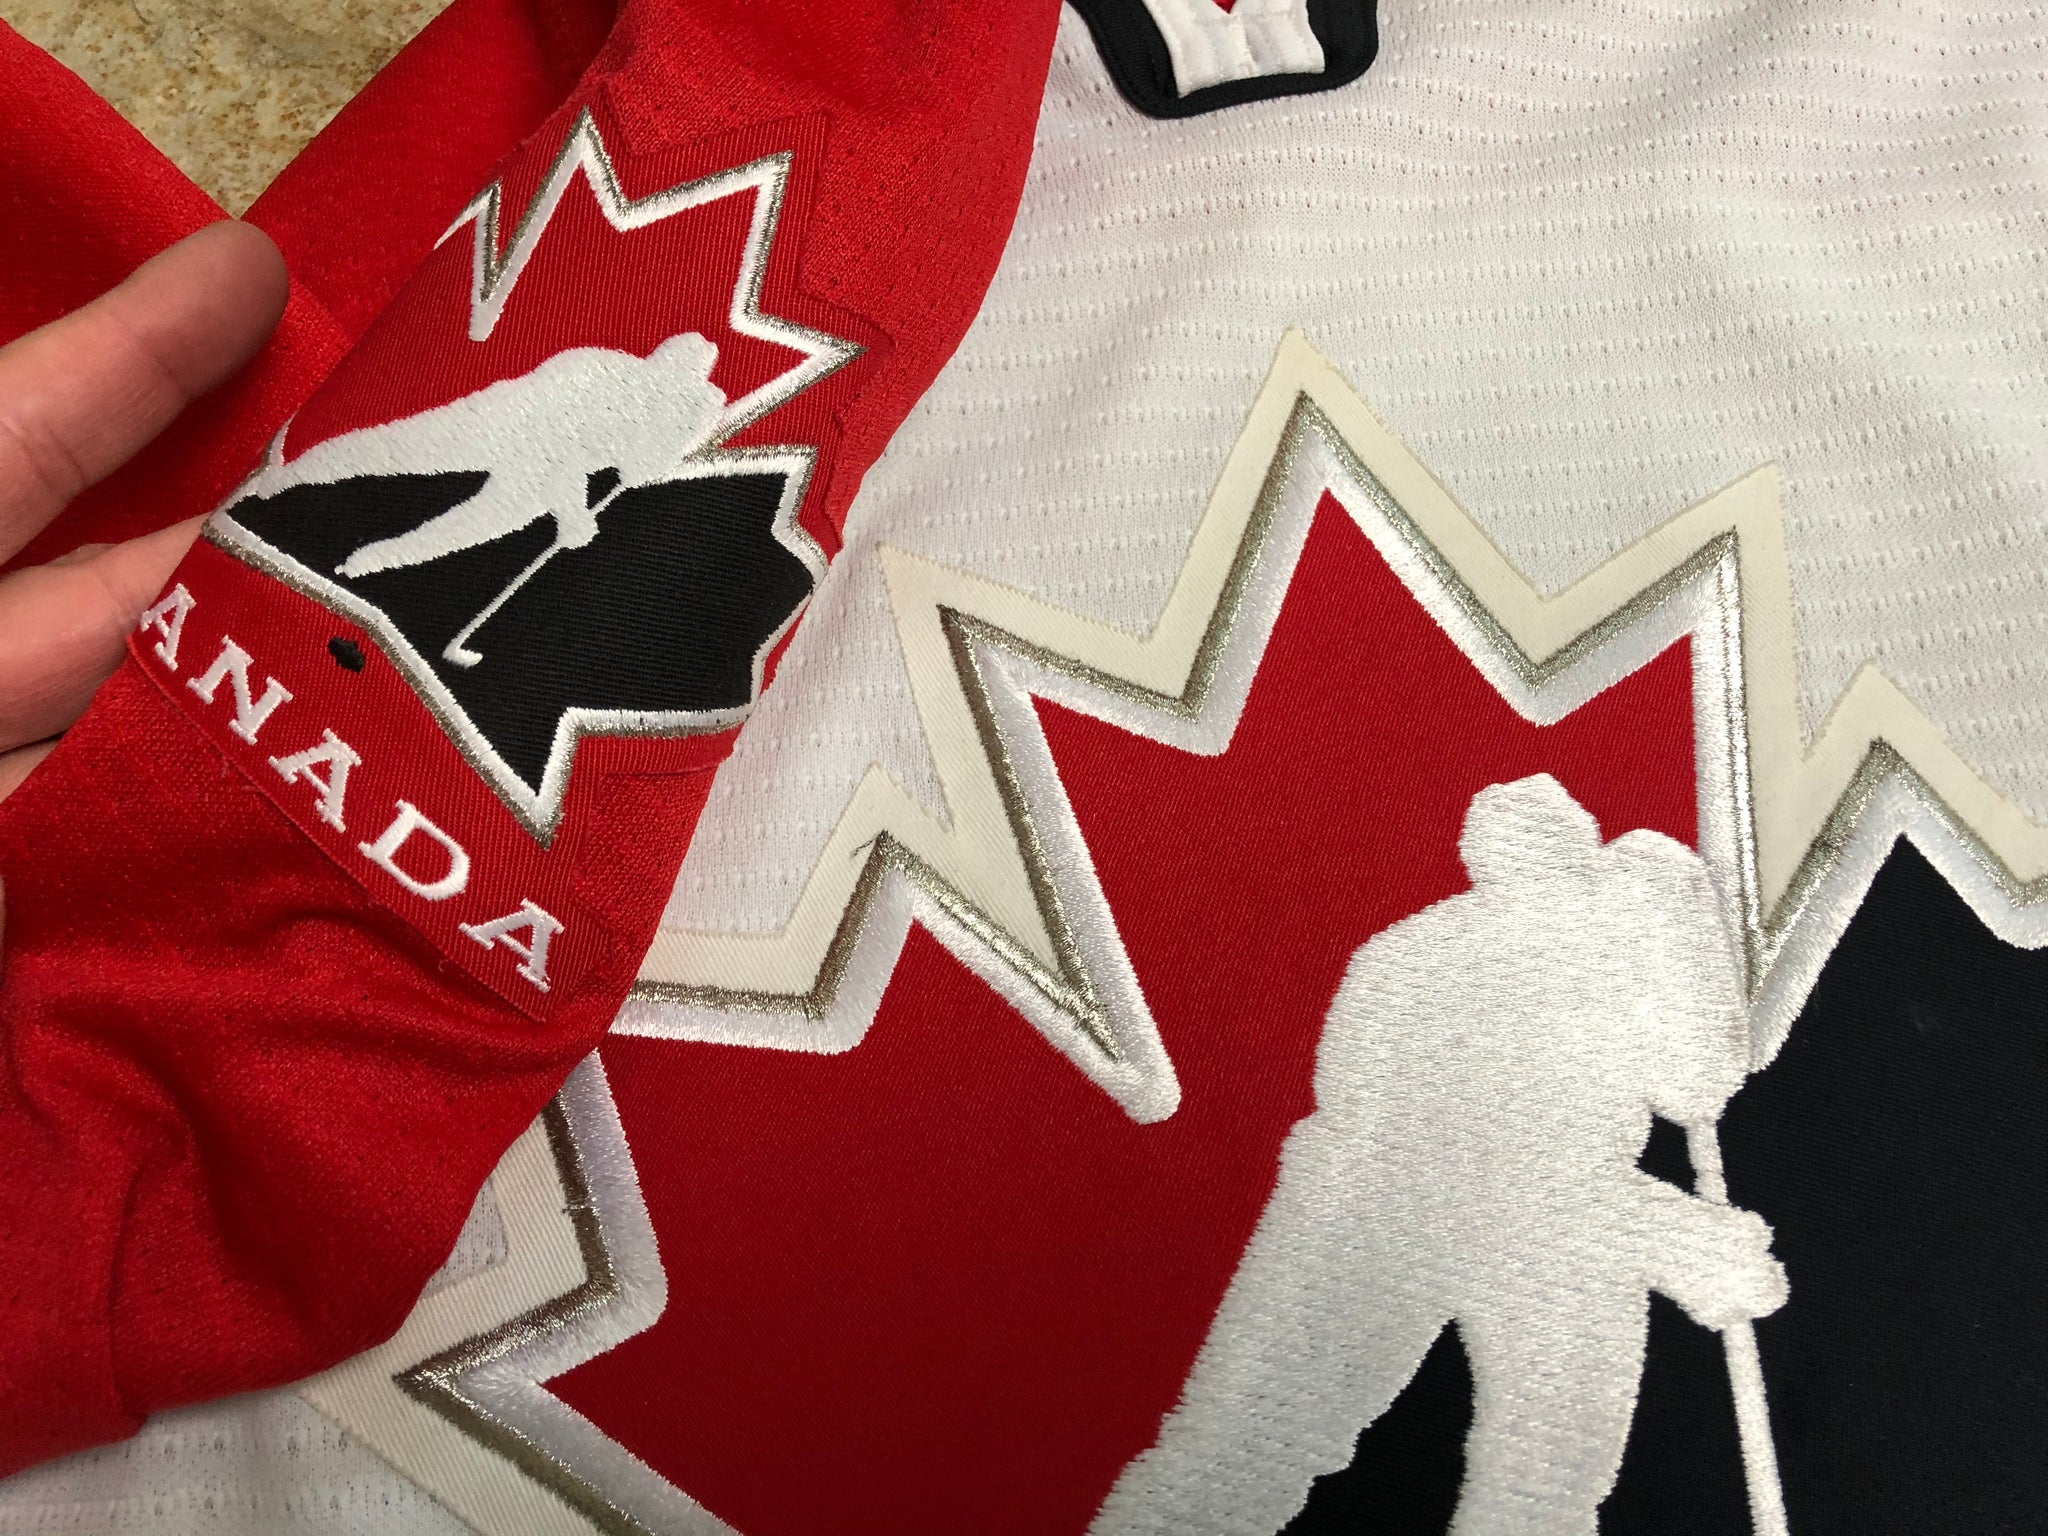 NIKE Team Canada Nike Infant Hockey Jersey